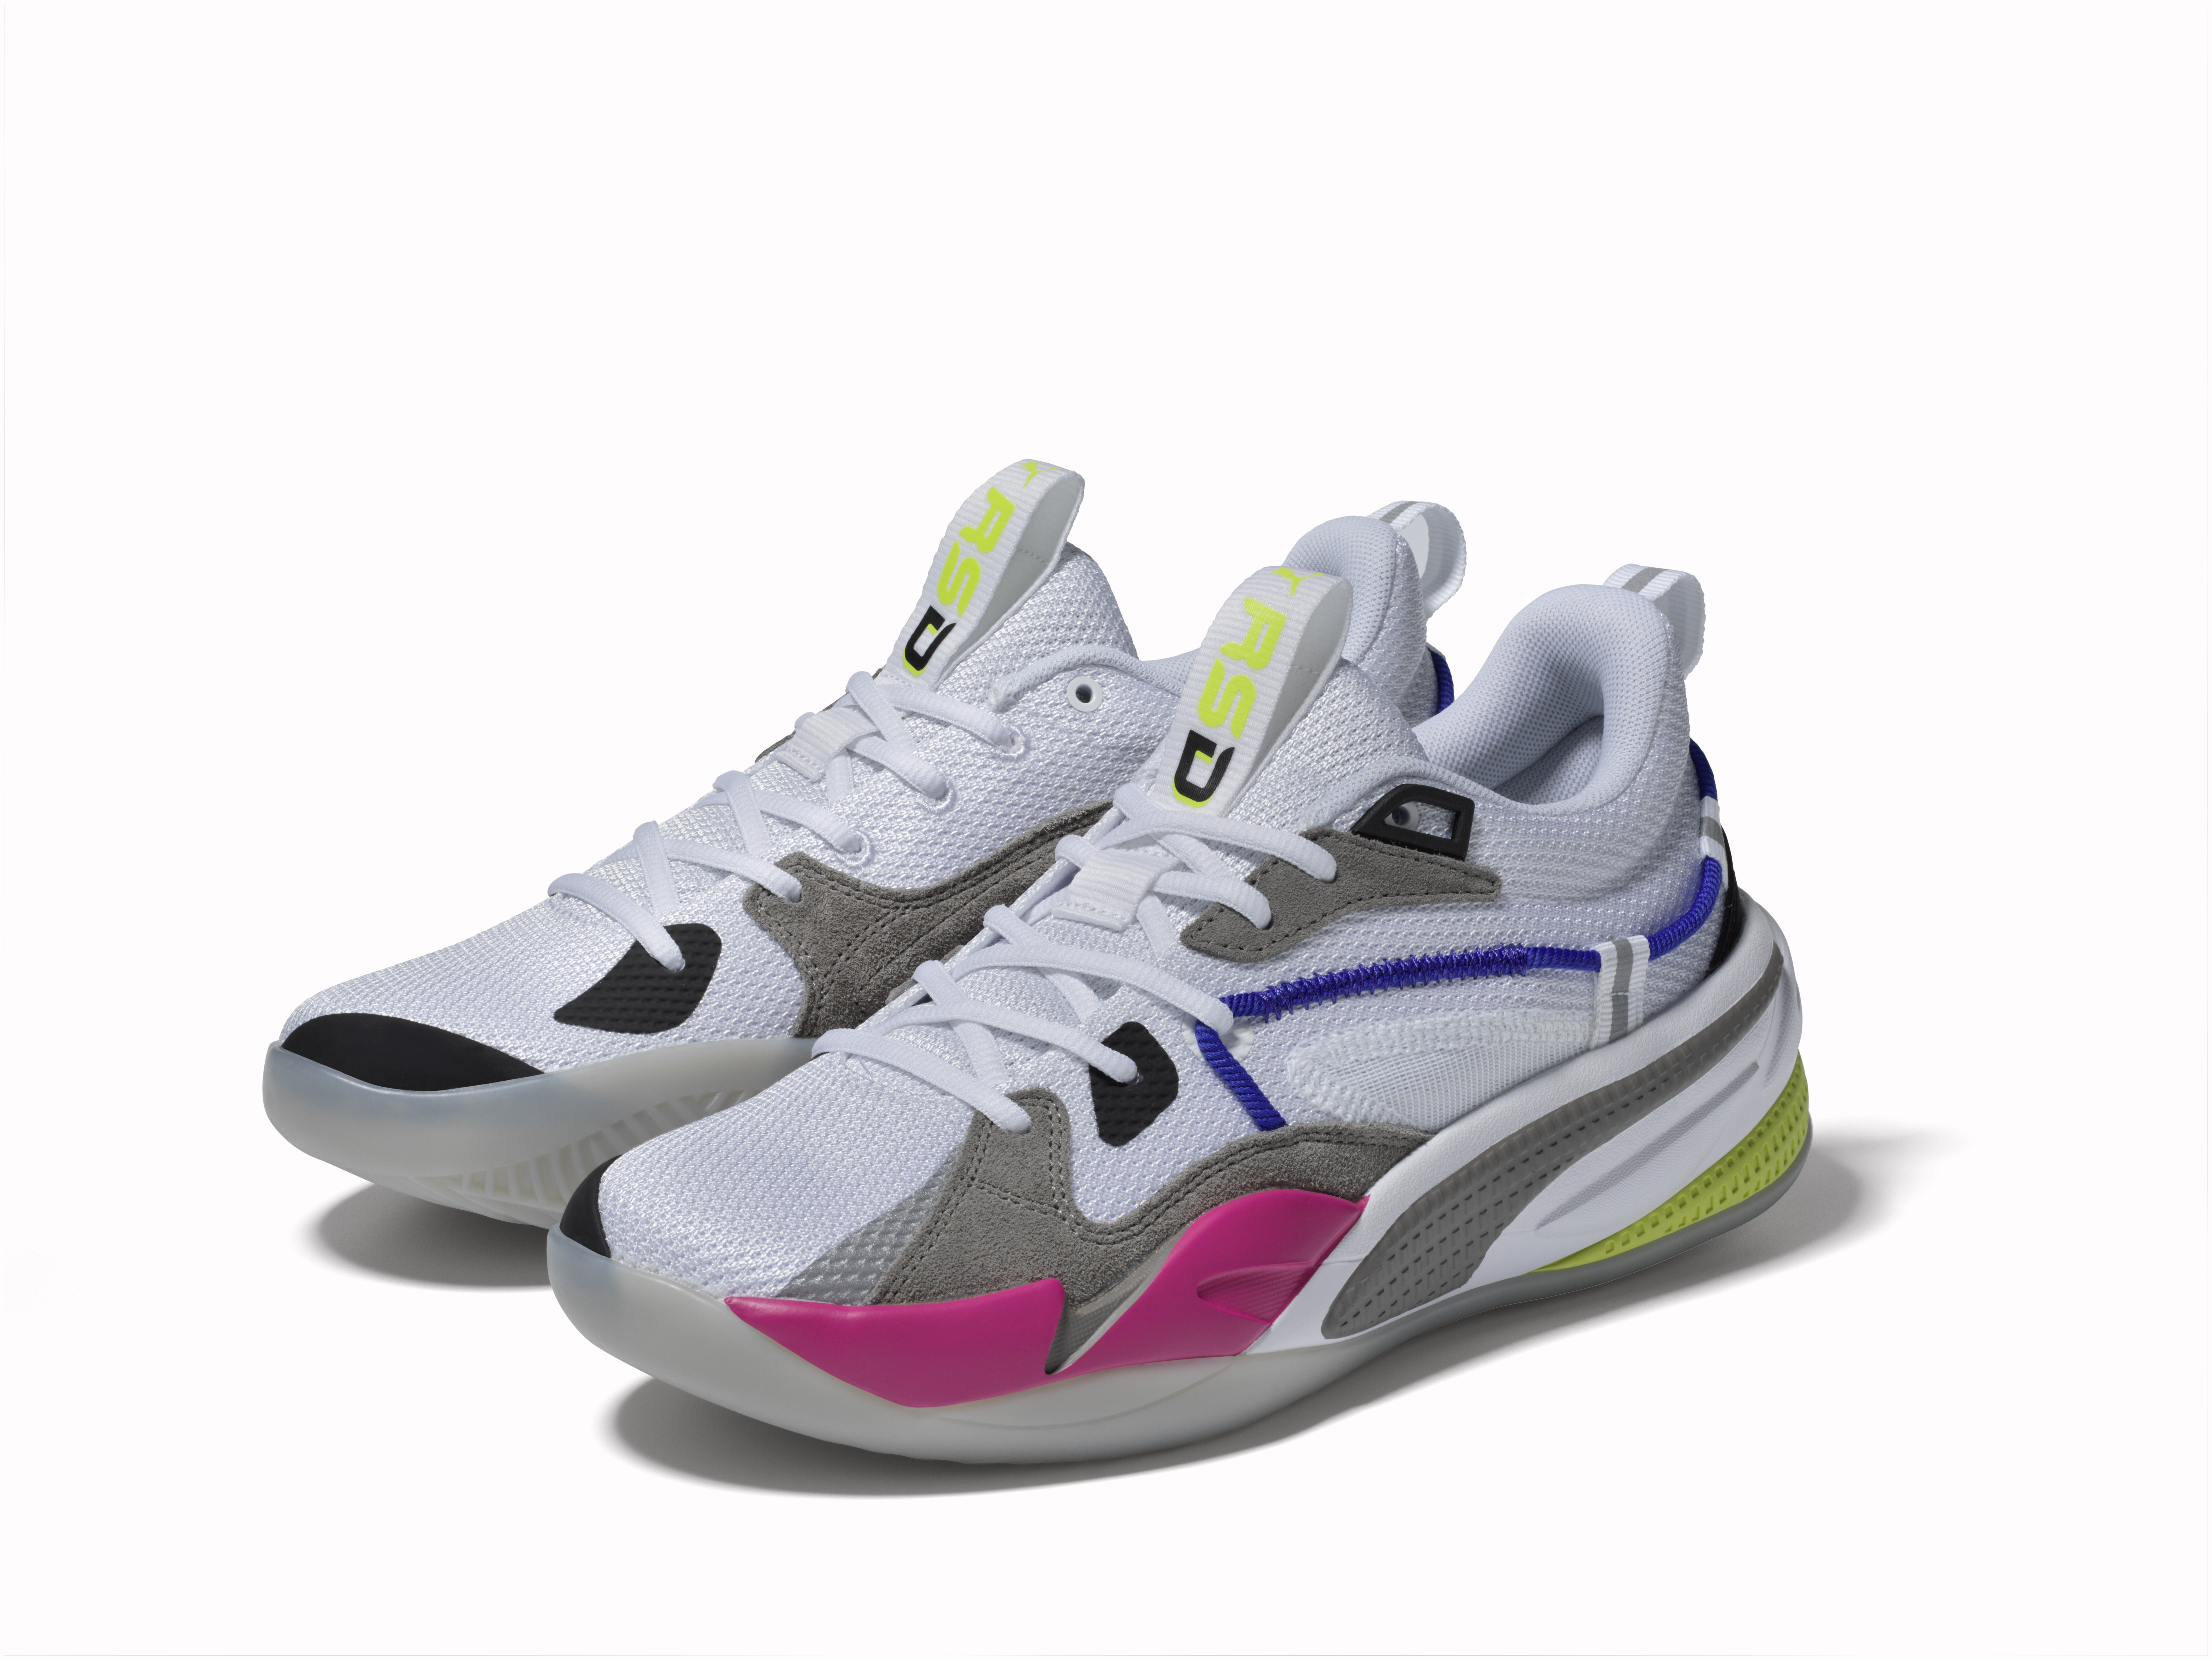 PUMA Hoops Releasing PROTO Design of J. Cole's RS-DREAMER Basketball Shoe